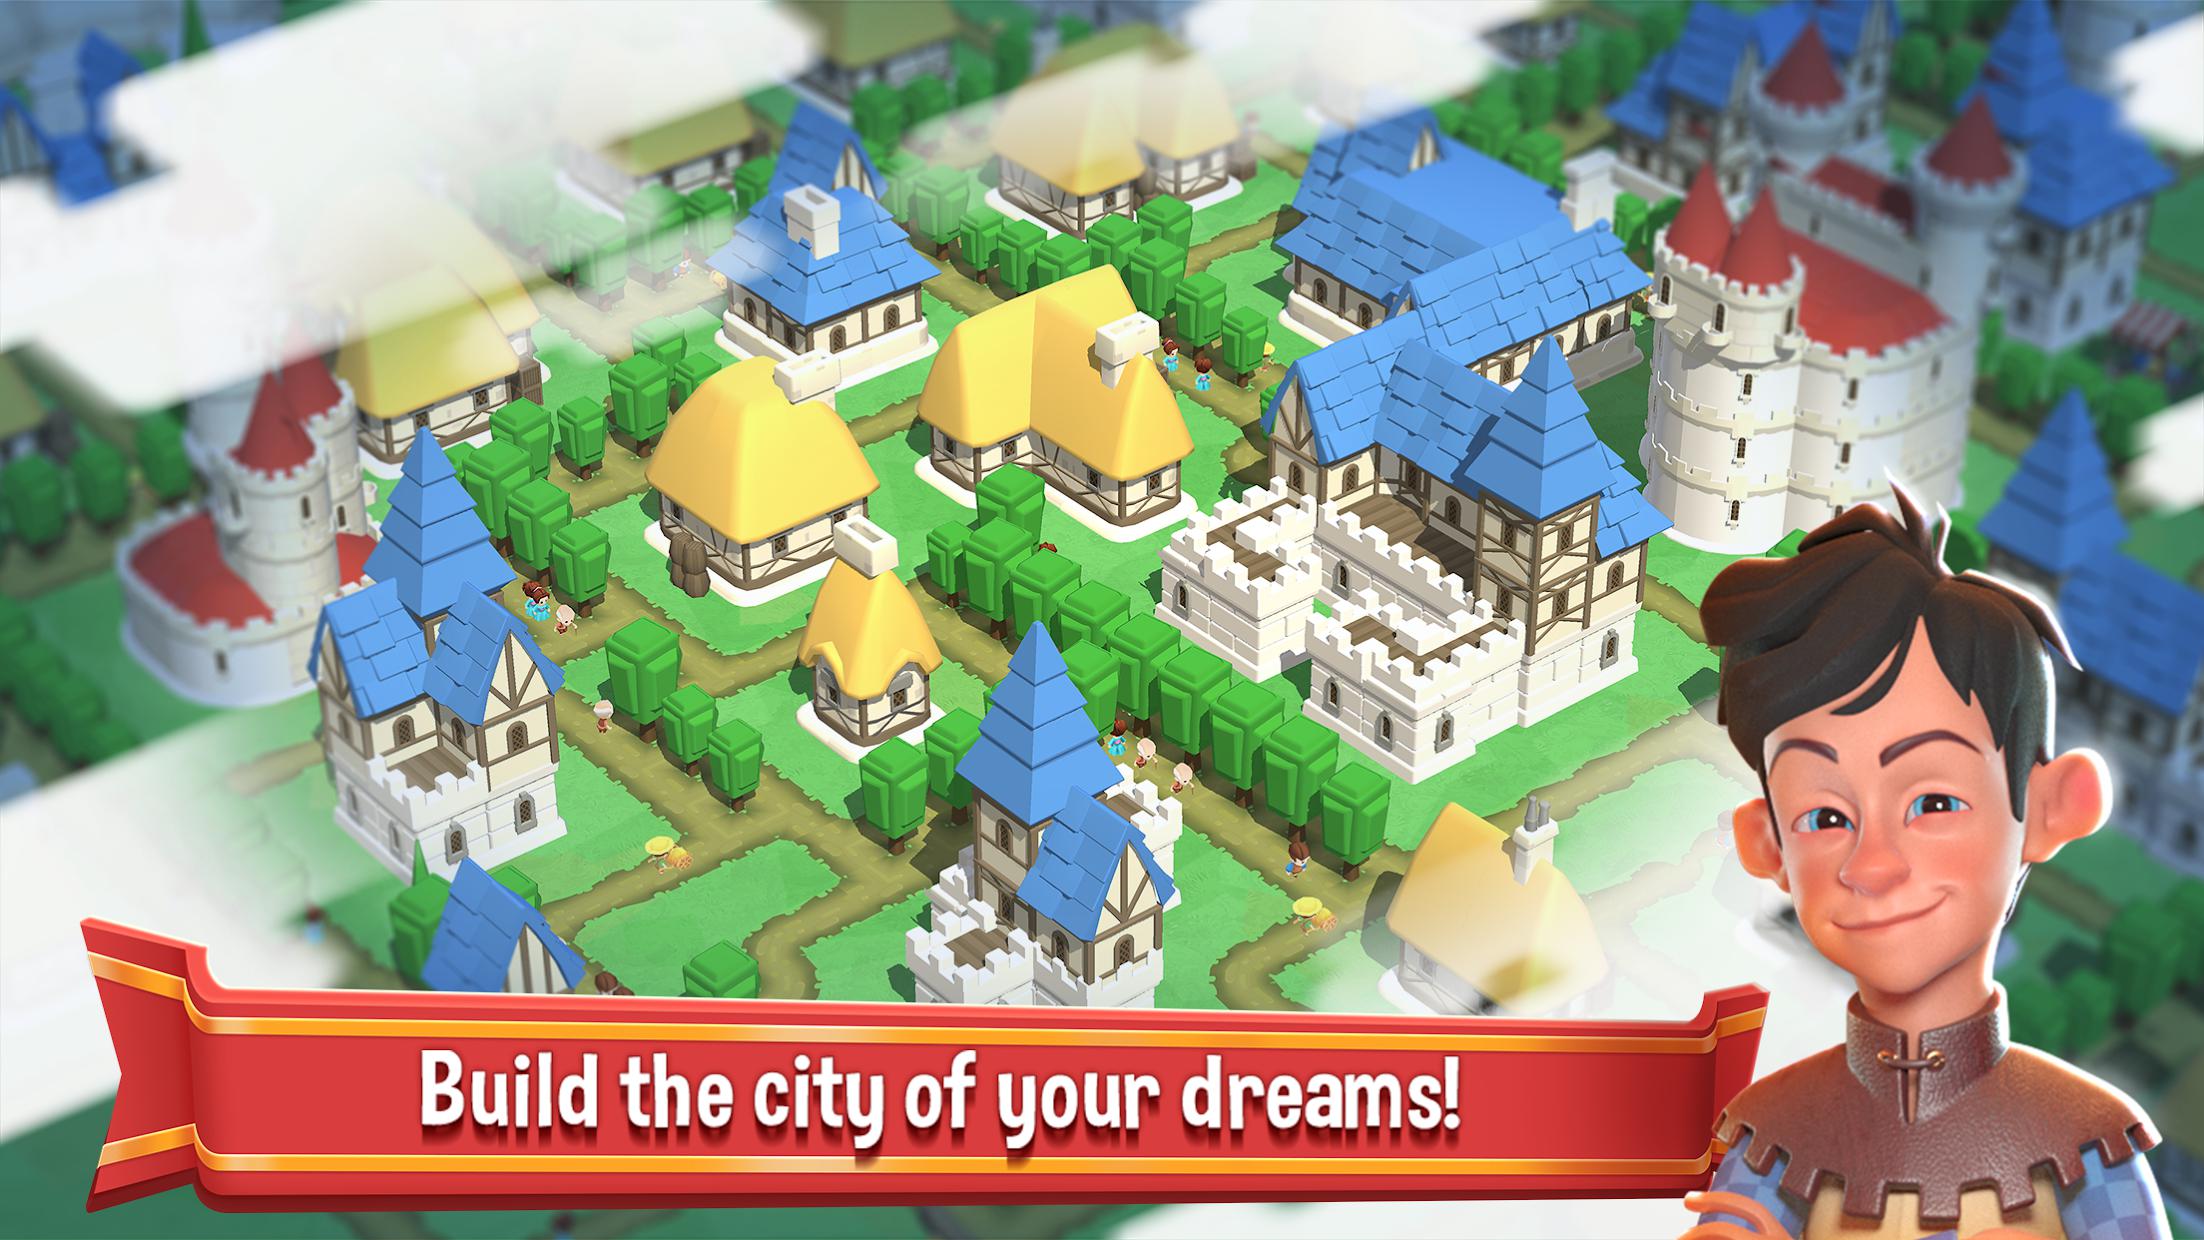 Crafty Town - Kingdom Builder